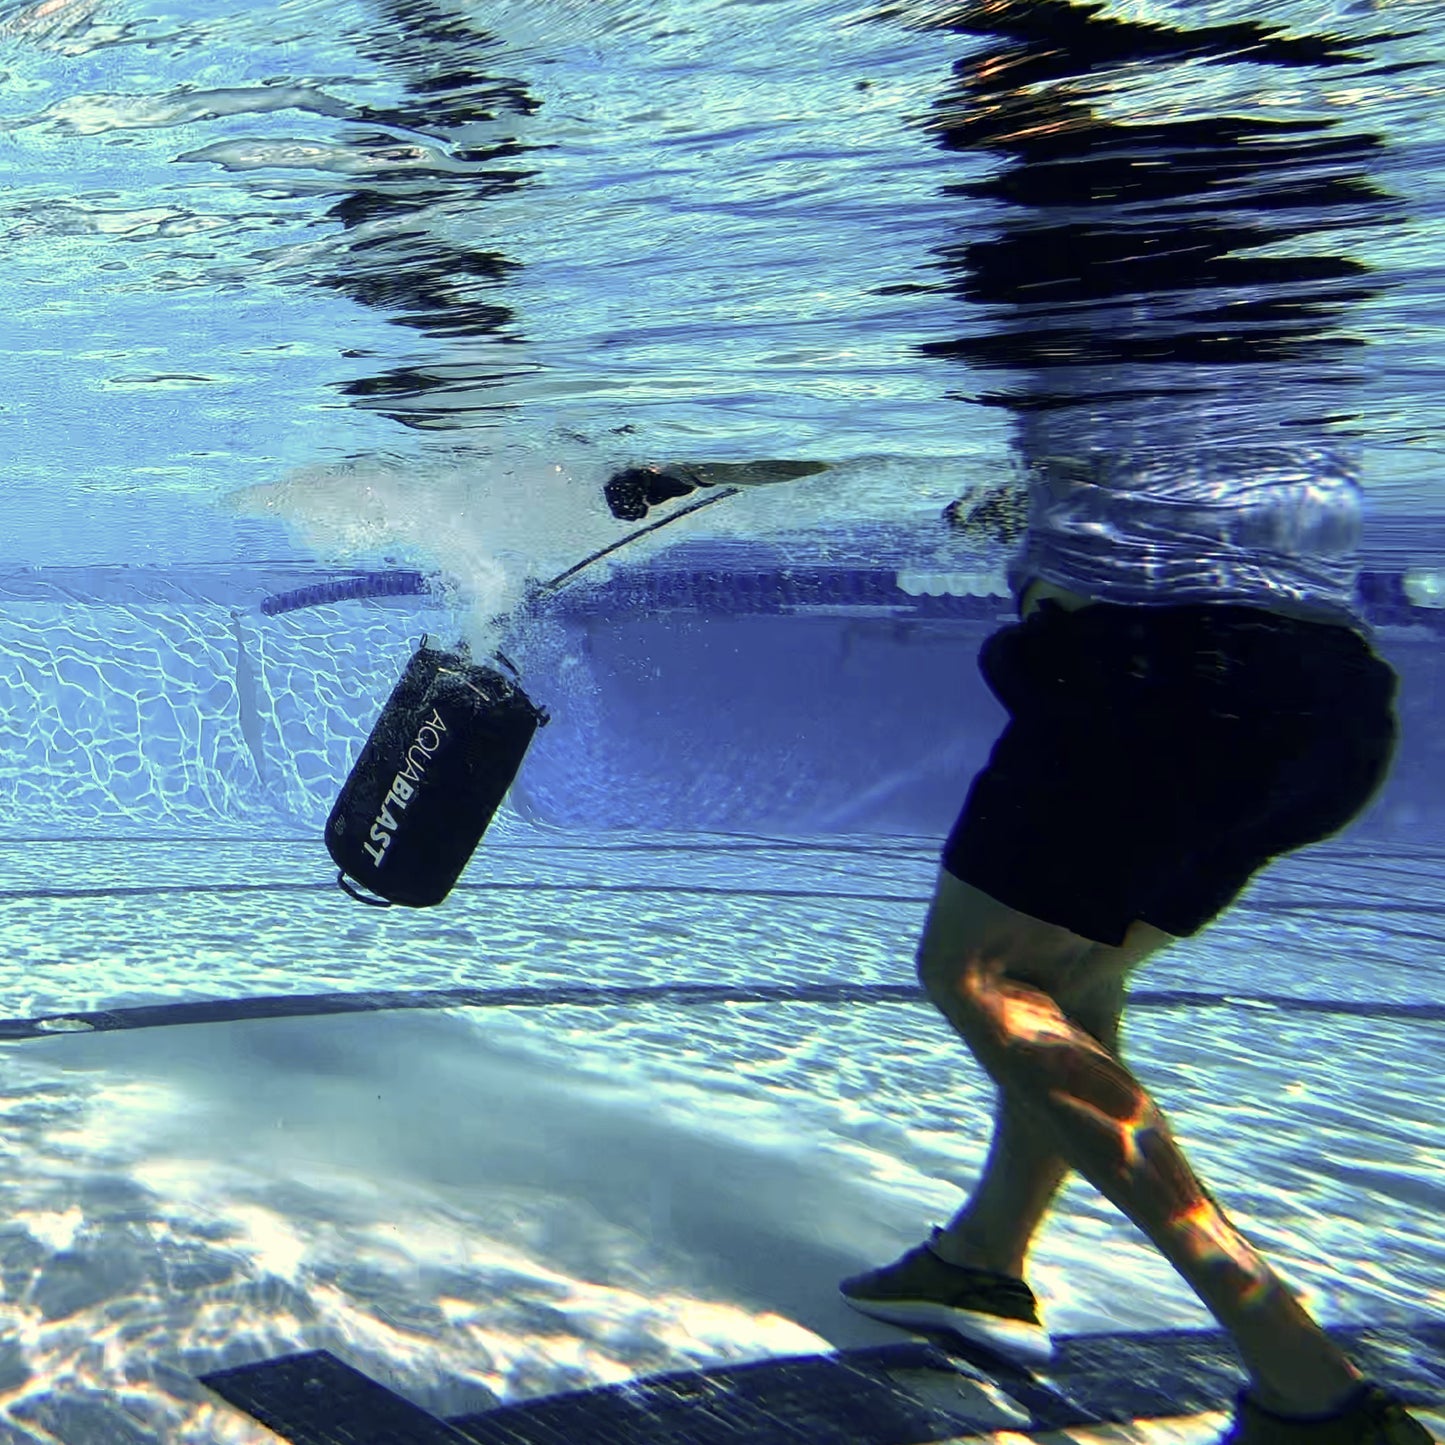 AquaBLAST Harness tethers the bag in any swimming pool for low impact aqua kickboxing